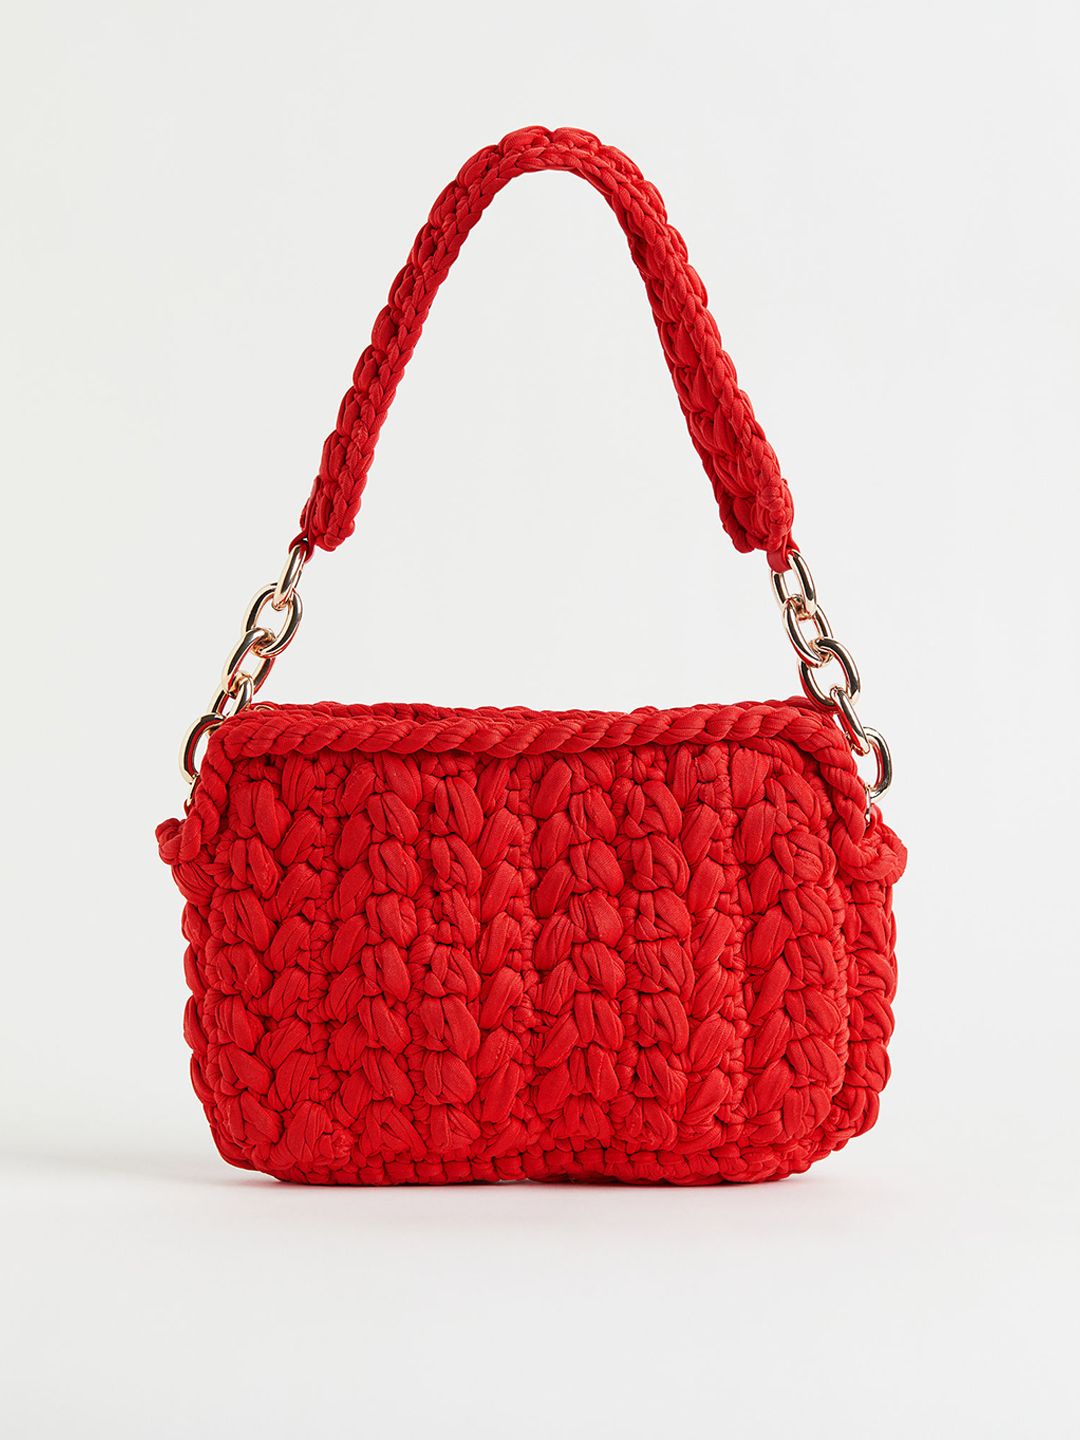 H&M Red Self Design Shoulder Bag Price in India